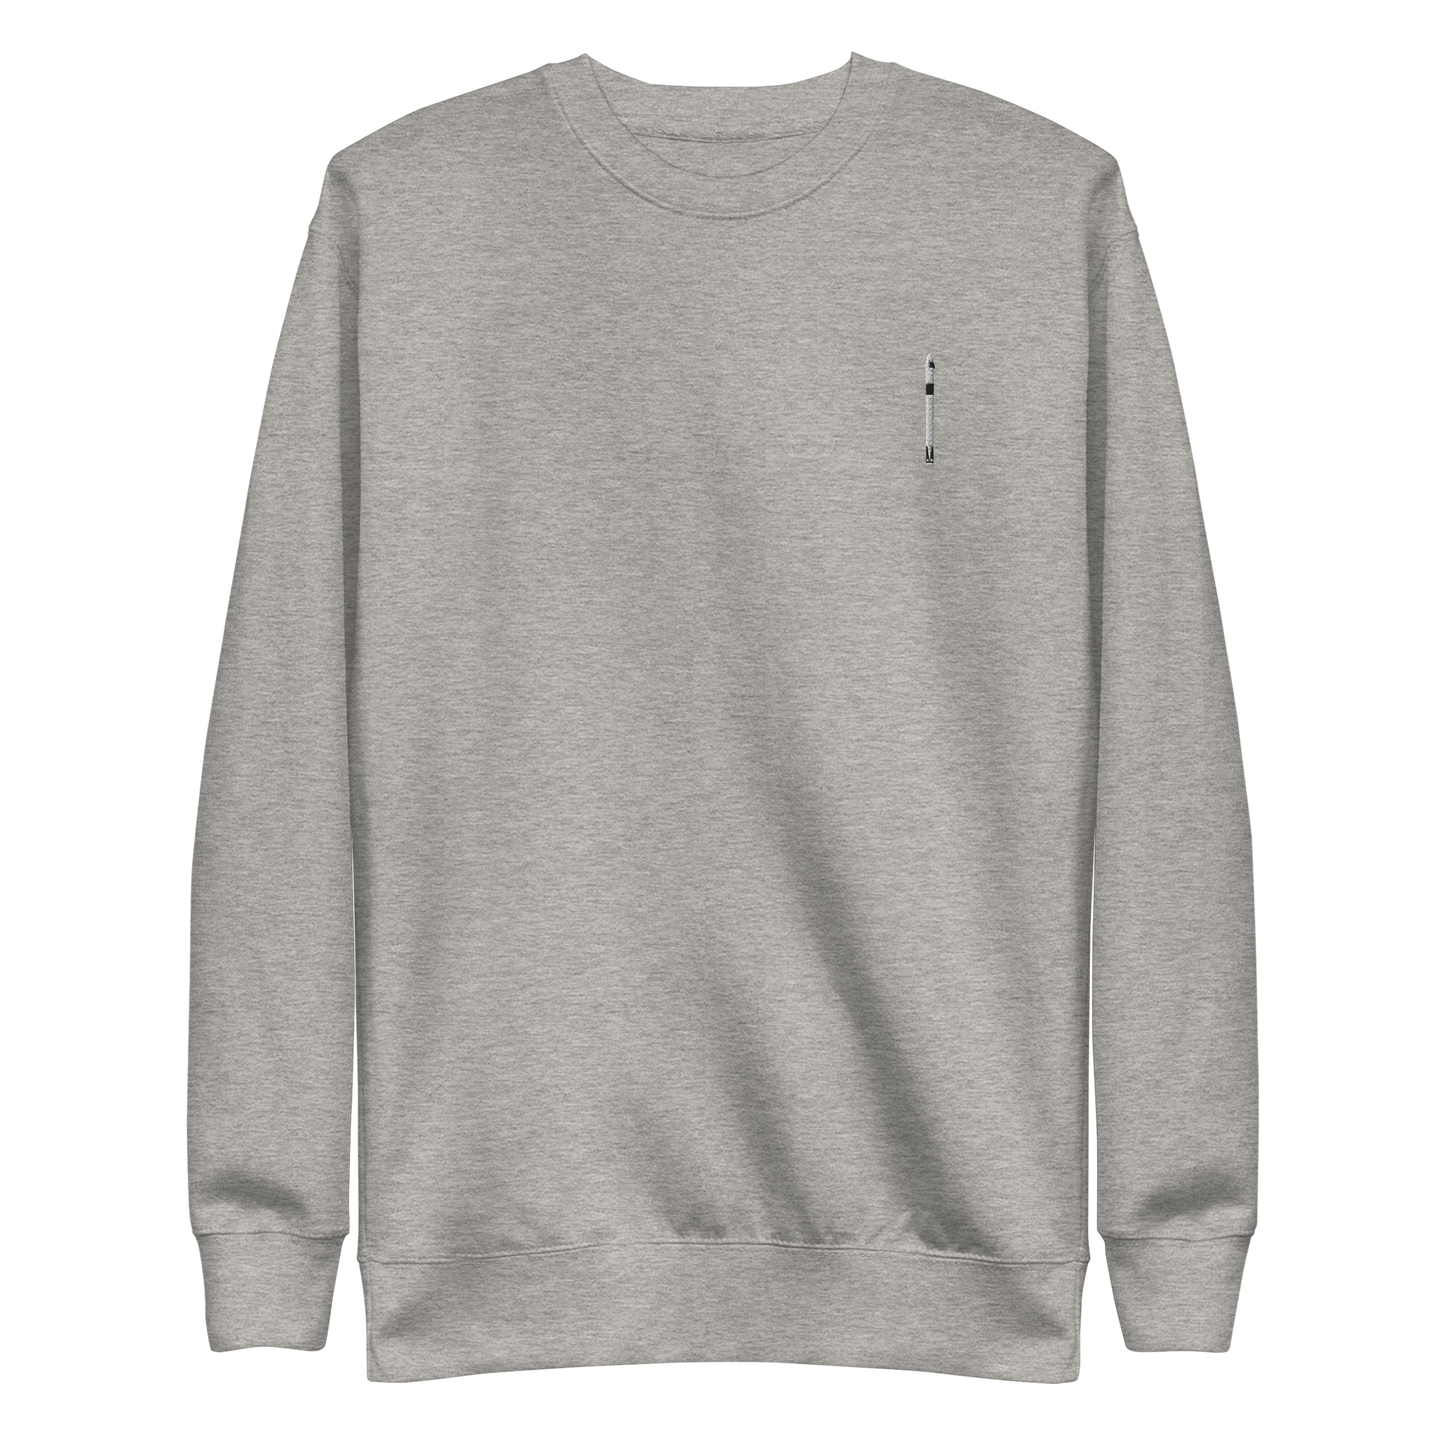 Falcon 9 Embroidered Sweatshirt